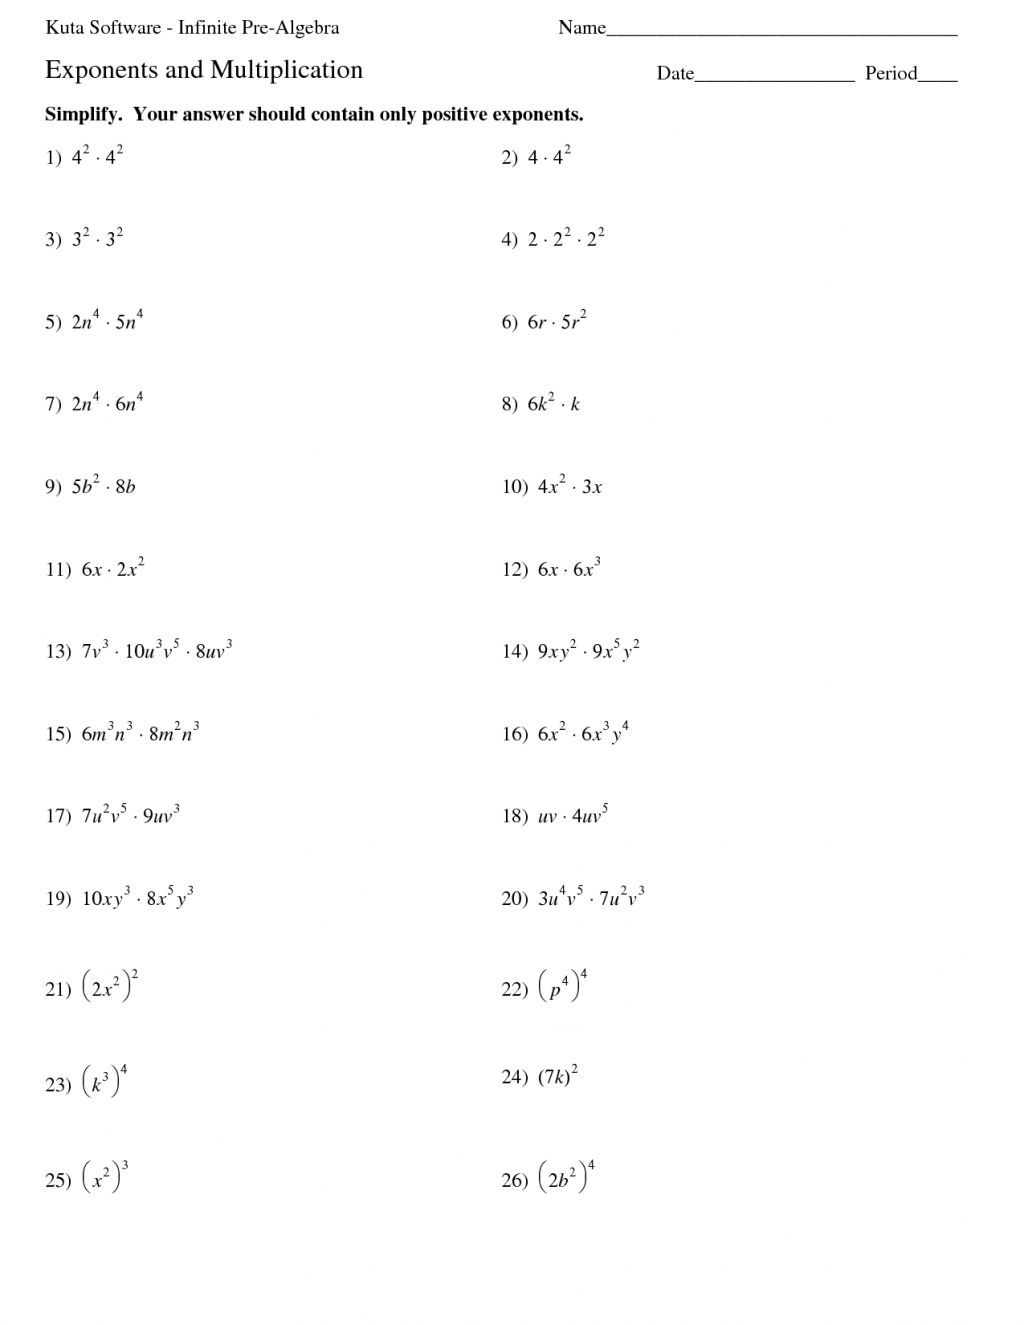 Multiplication Properties Of Exponents Worksheet 360741